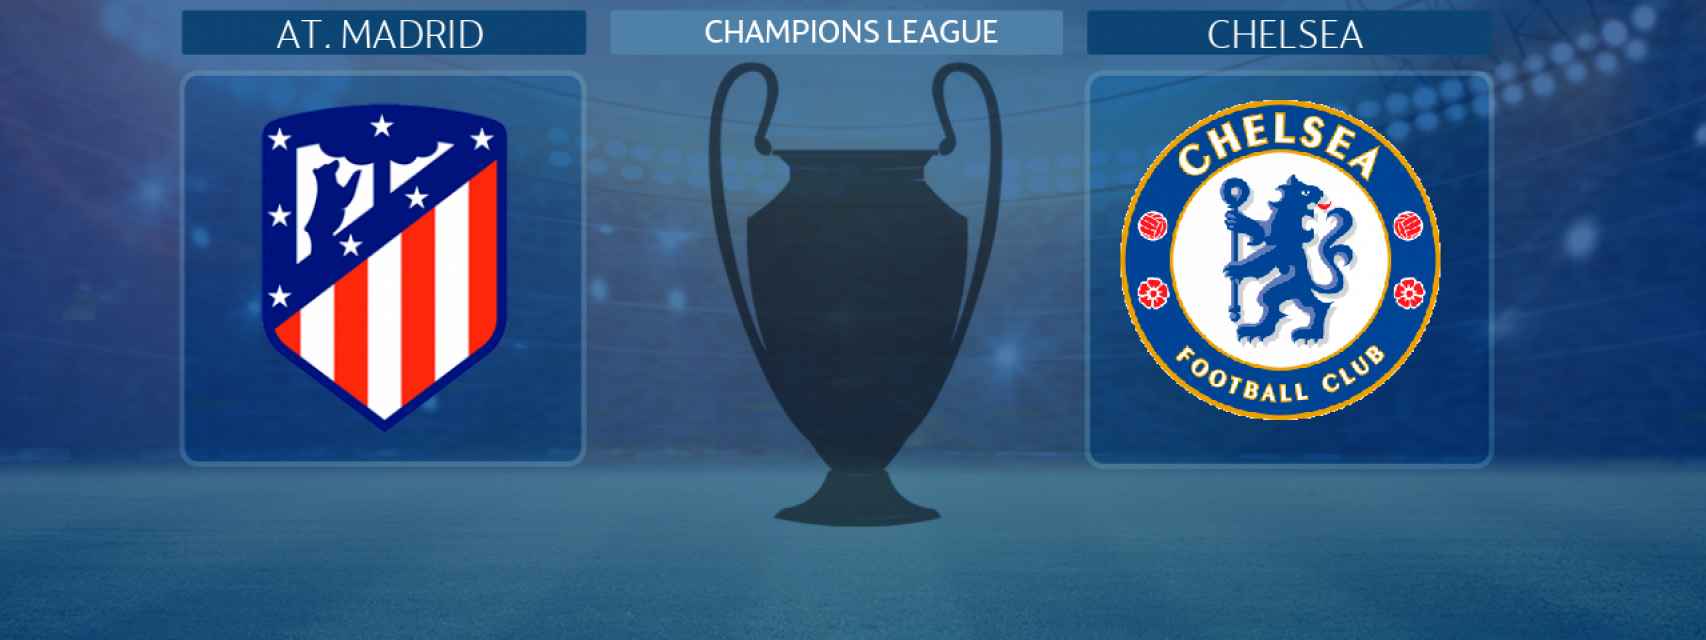 Atlético de Madrid - Chelsea, partido de la Champions League